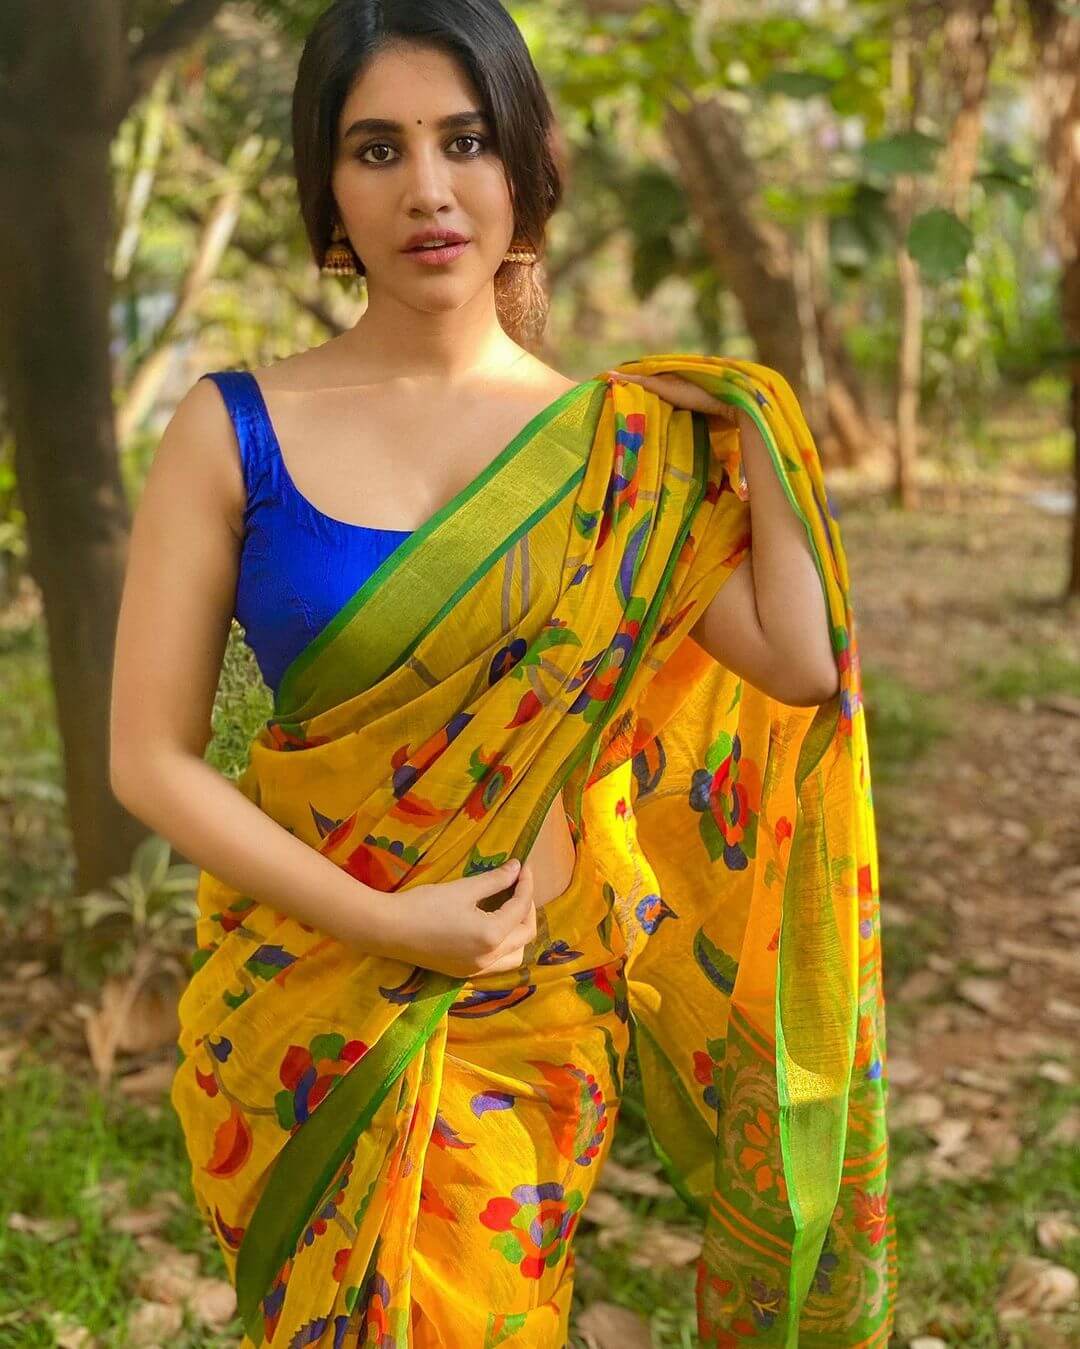 Fabulous Nabha Natesh In Yellow Cotton Saree Outfit : Nabha Natesh Stylish and Traditional Outfit Looks